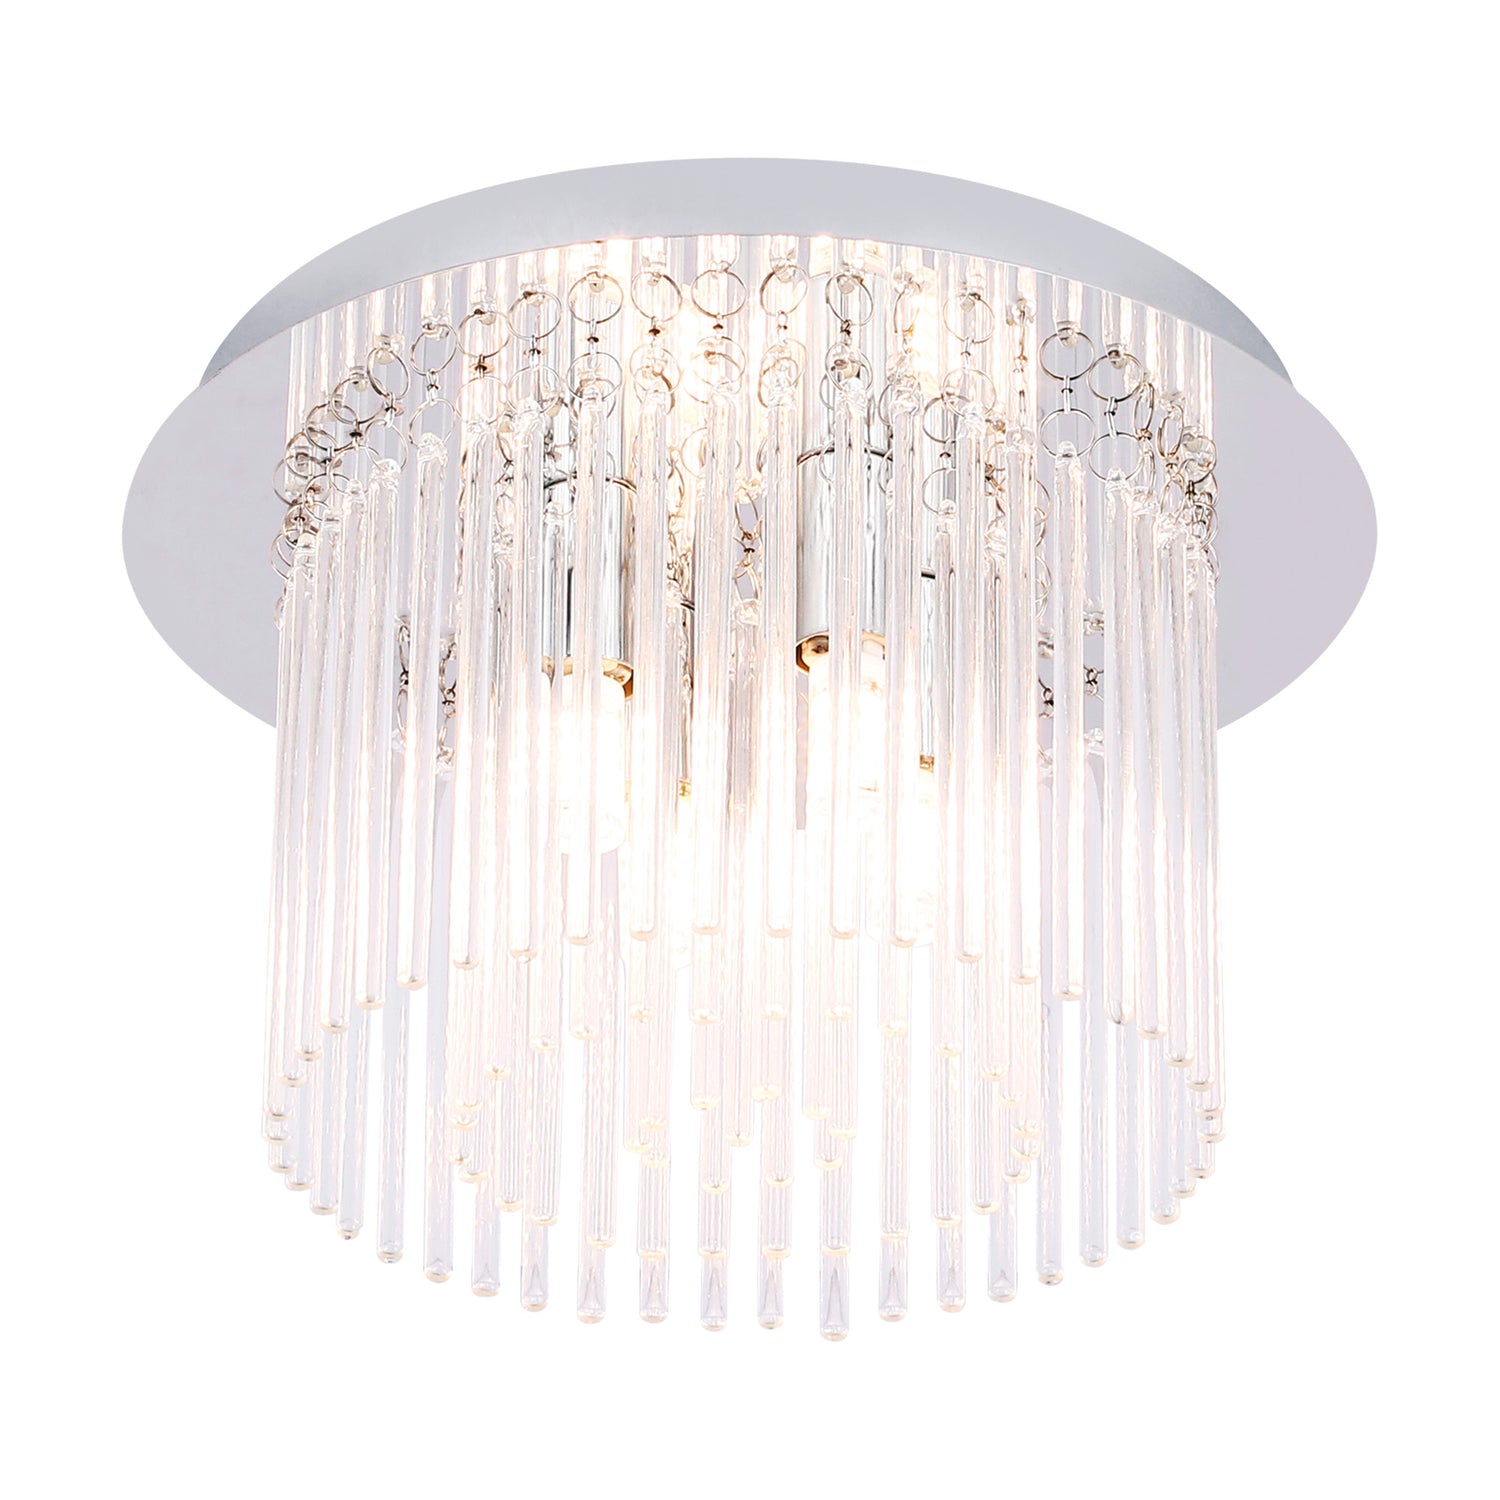 Clarence 4 Light Glass Crystal-Look Elegant Ceiling Light